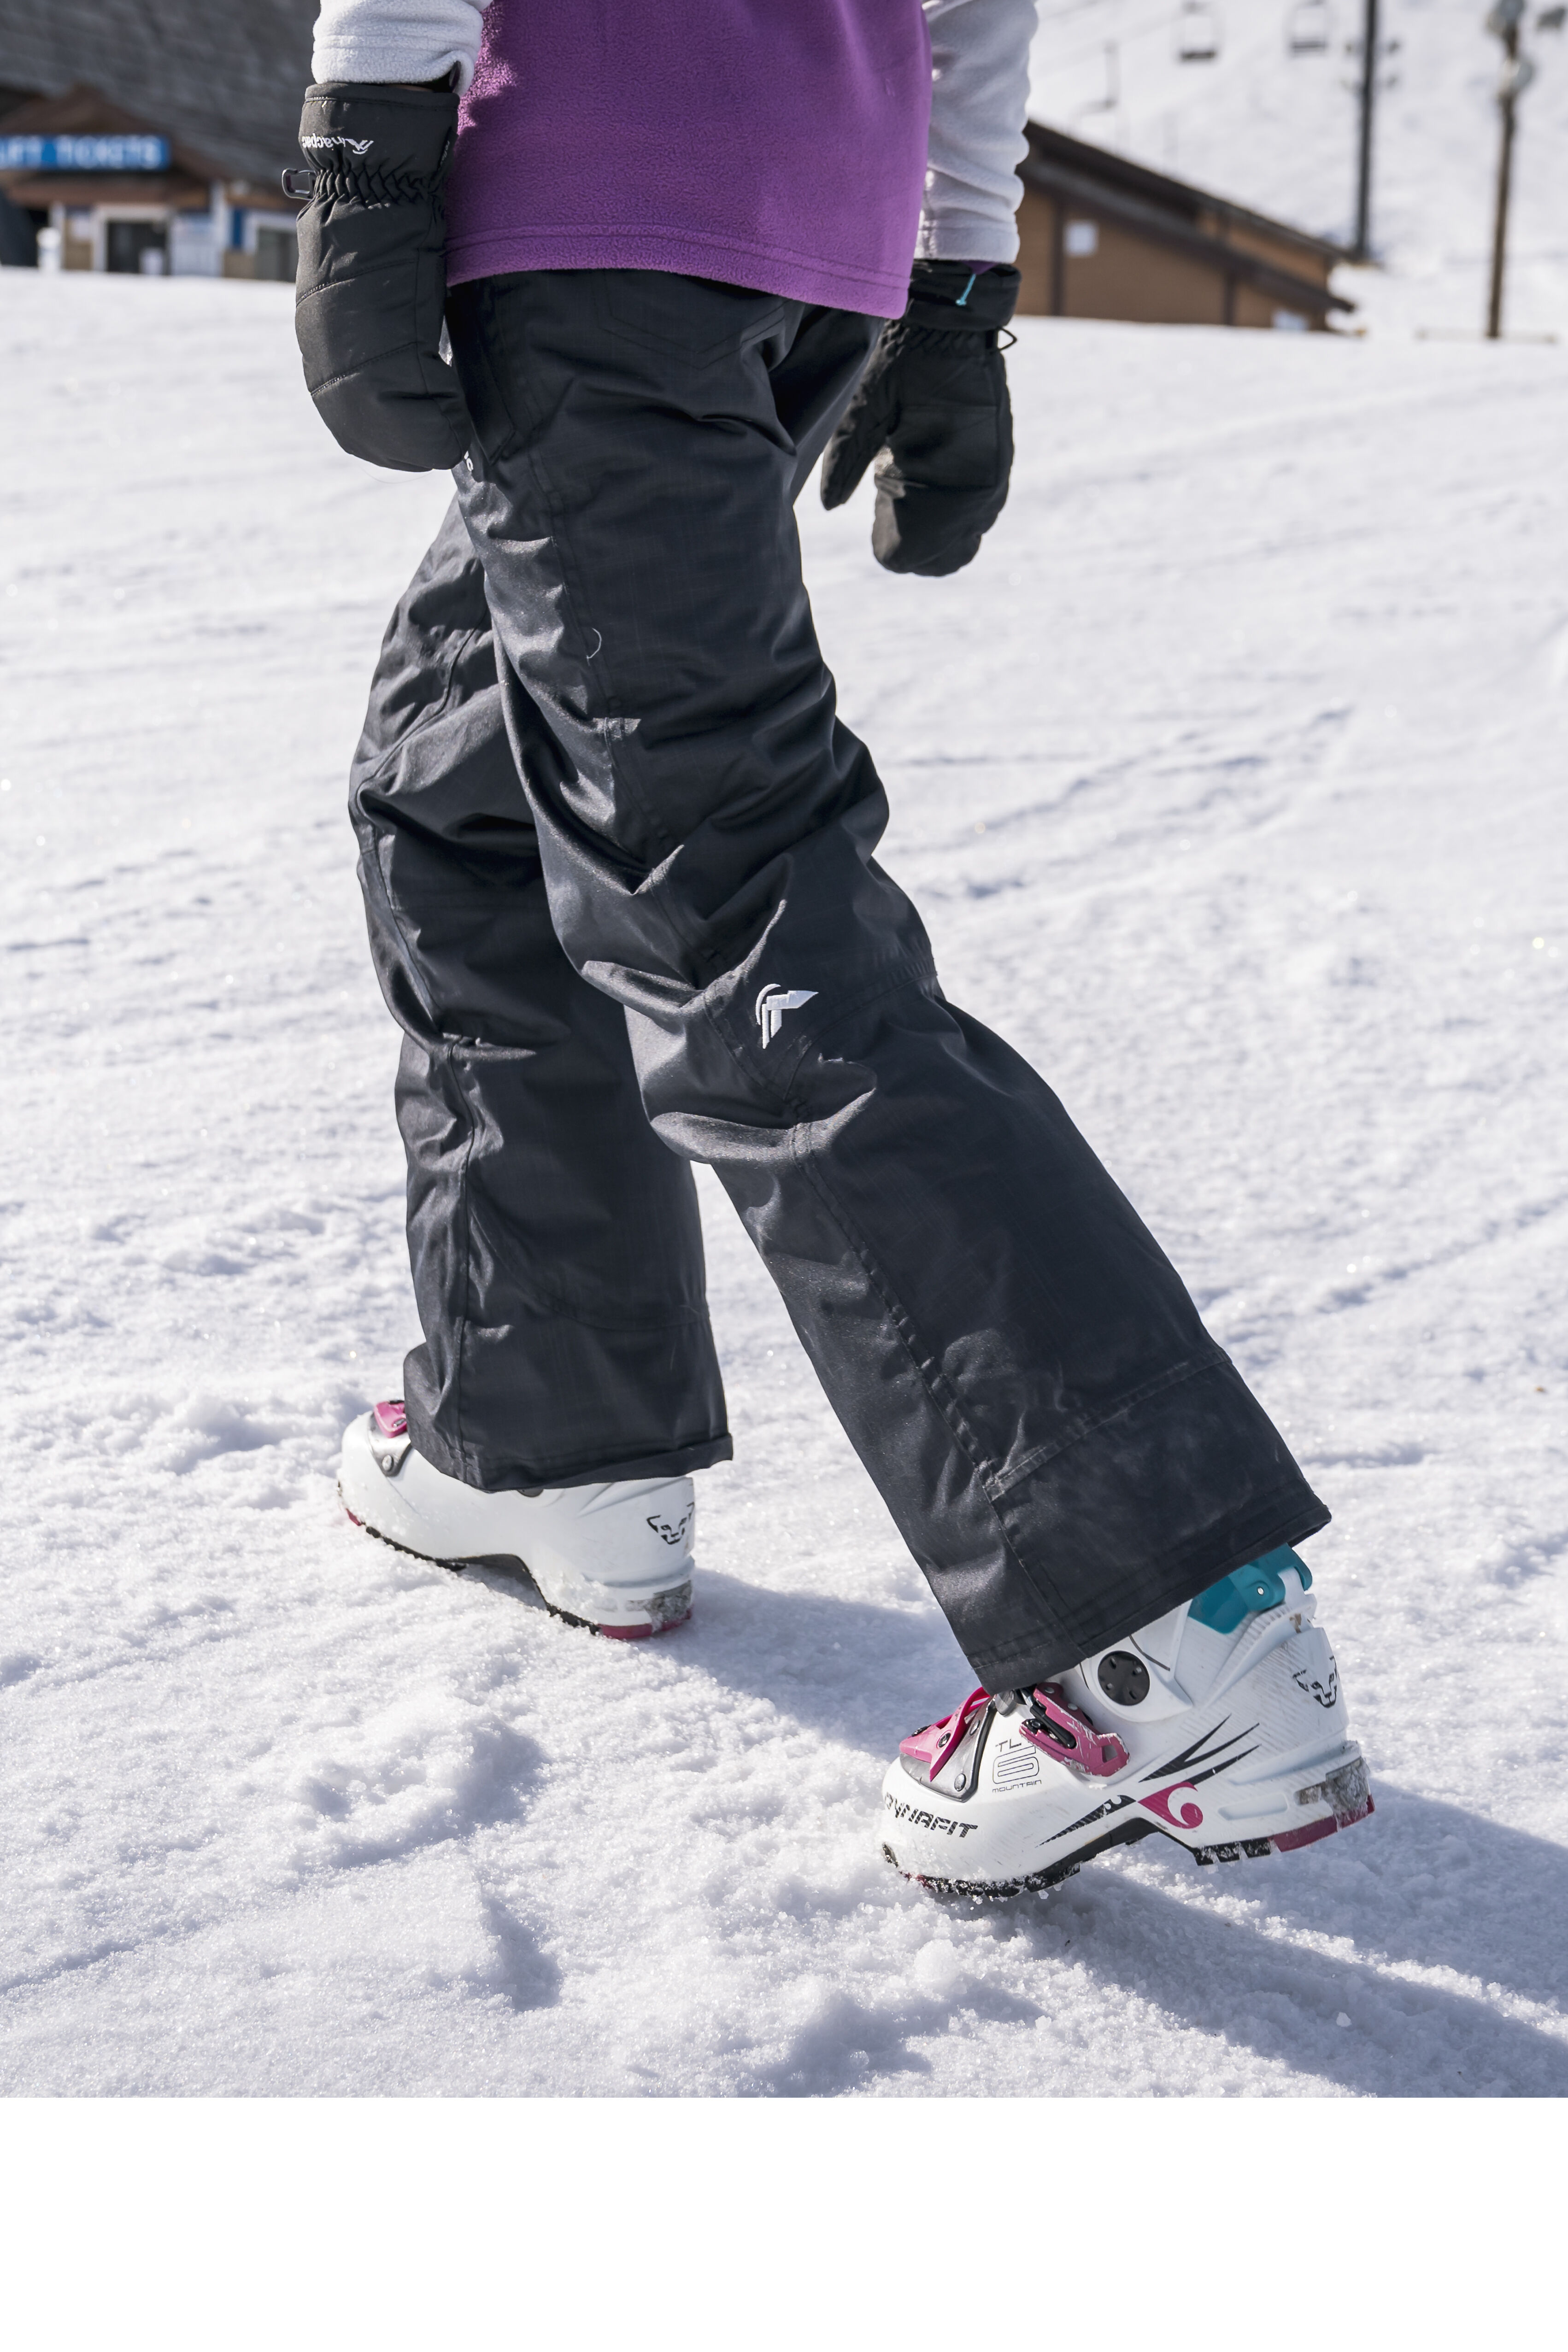 REI Co-op Powderbound Insulated Snow Pants - Men's Short Sizes | REI Co-op